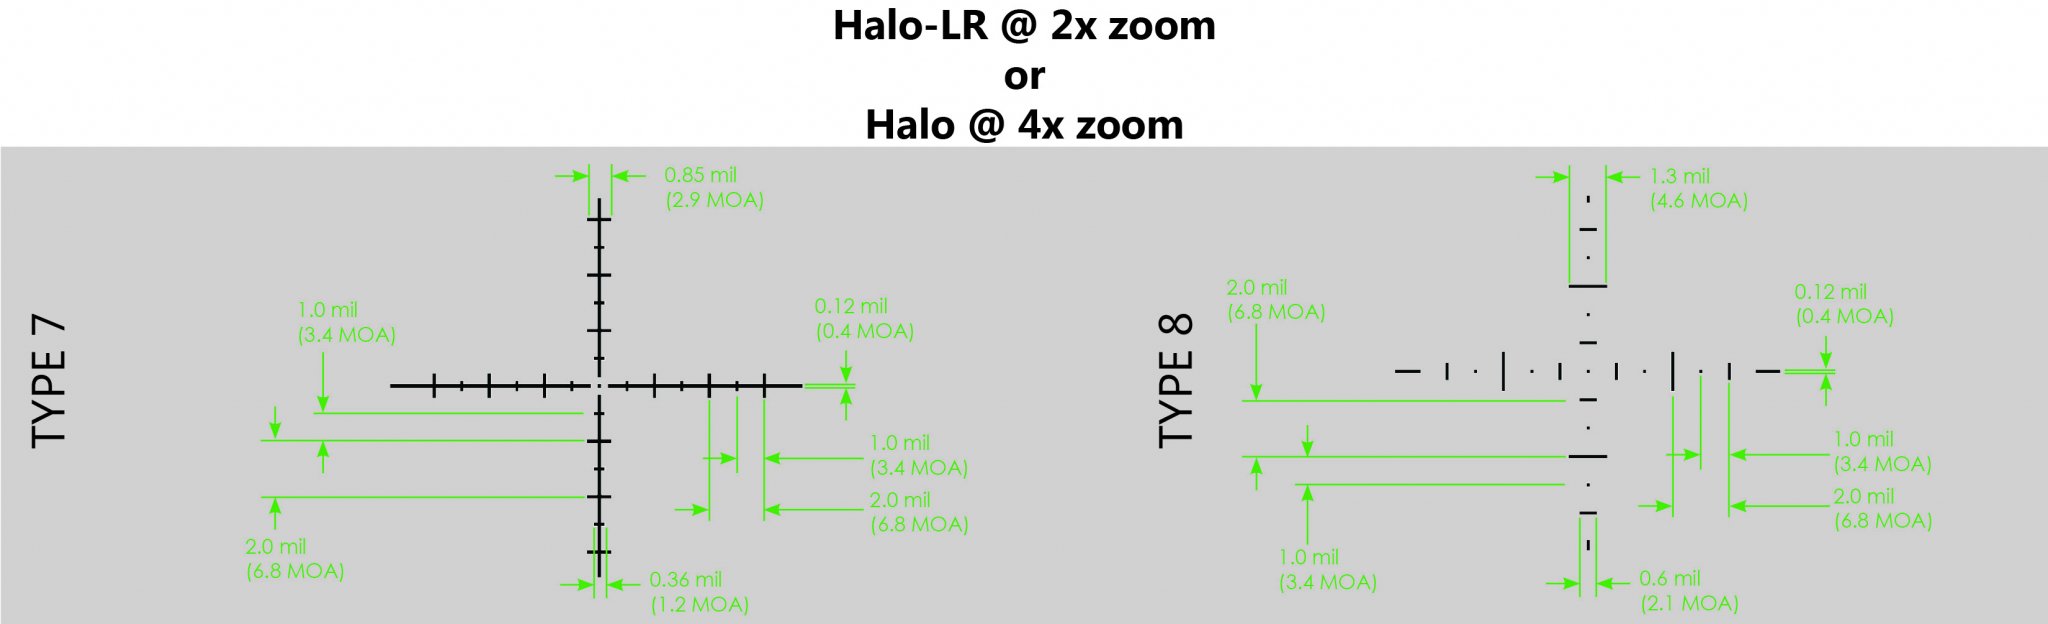 Halo-LR HALO Reticles 7 8.jpg